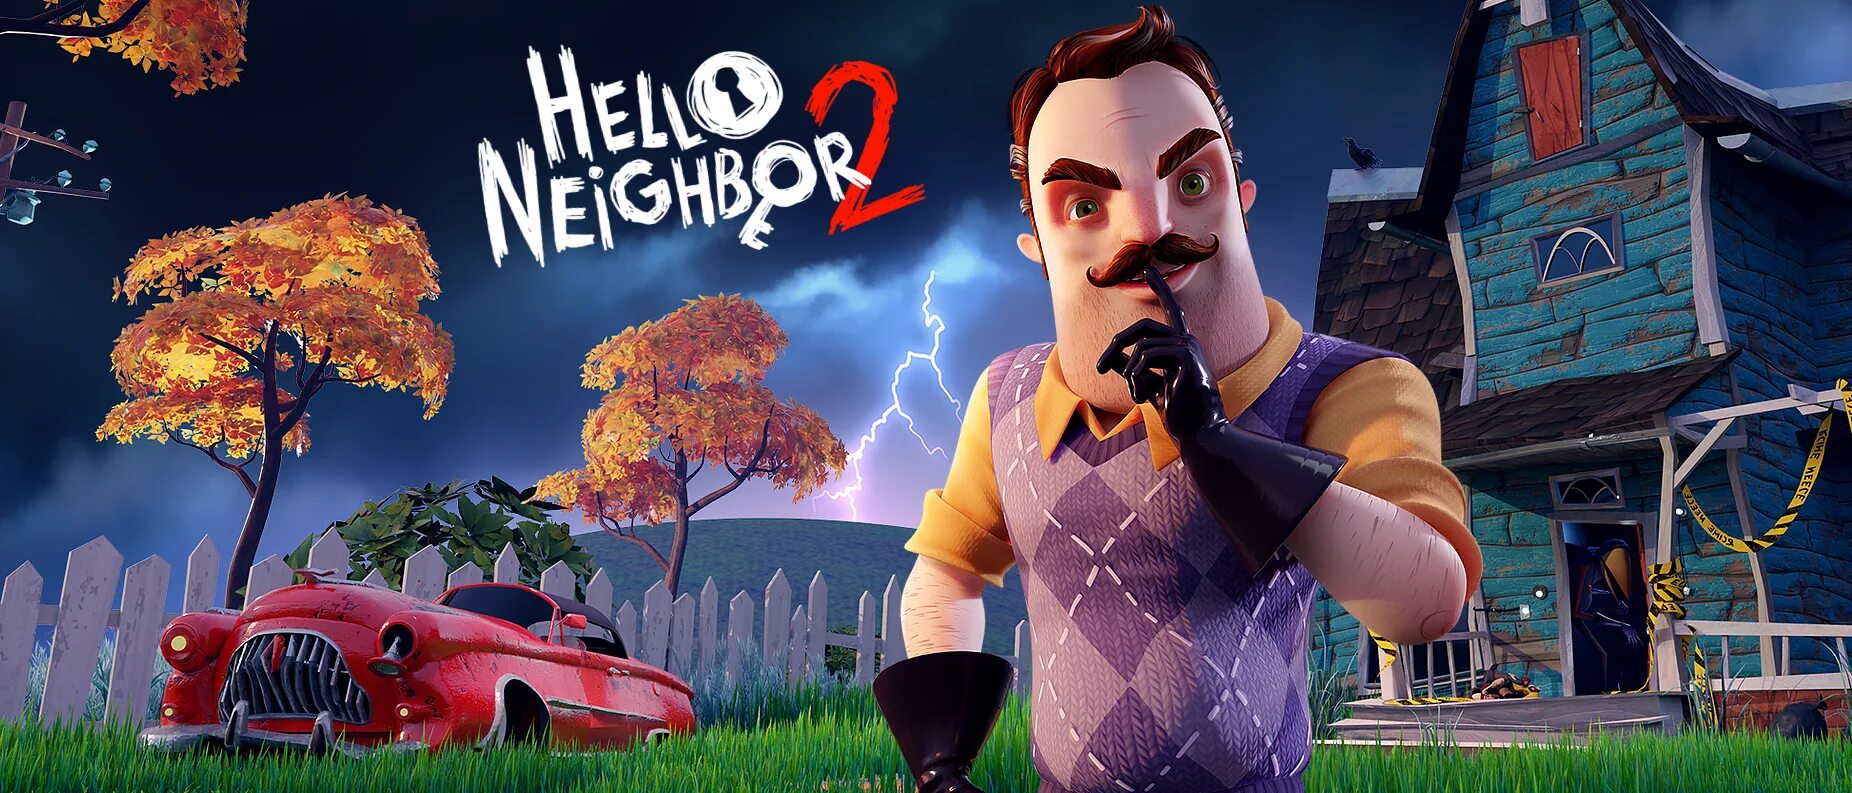 Hello Neighbor 2 сосед. Привет сосед 2 Альфа 1. Привет сосед сосед Альфа 1. Сосед Альфа 1 игры.